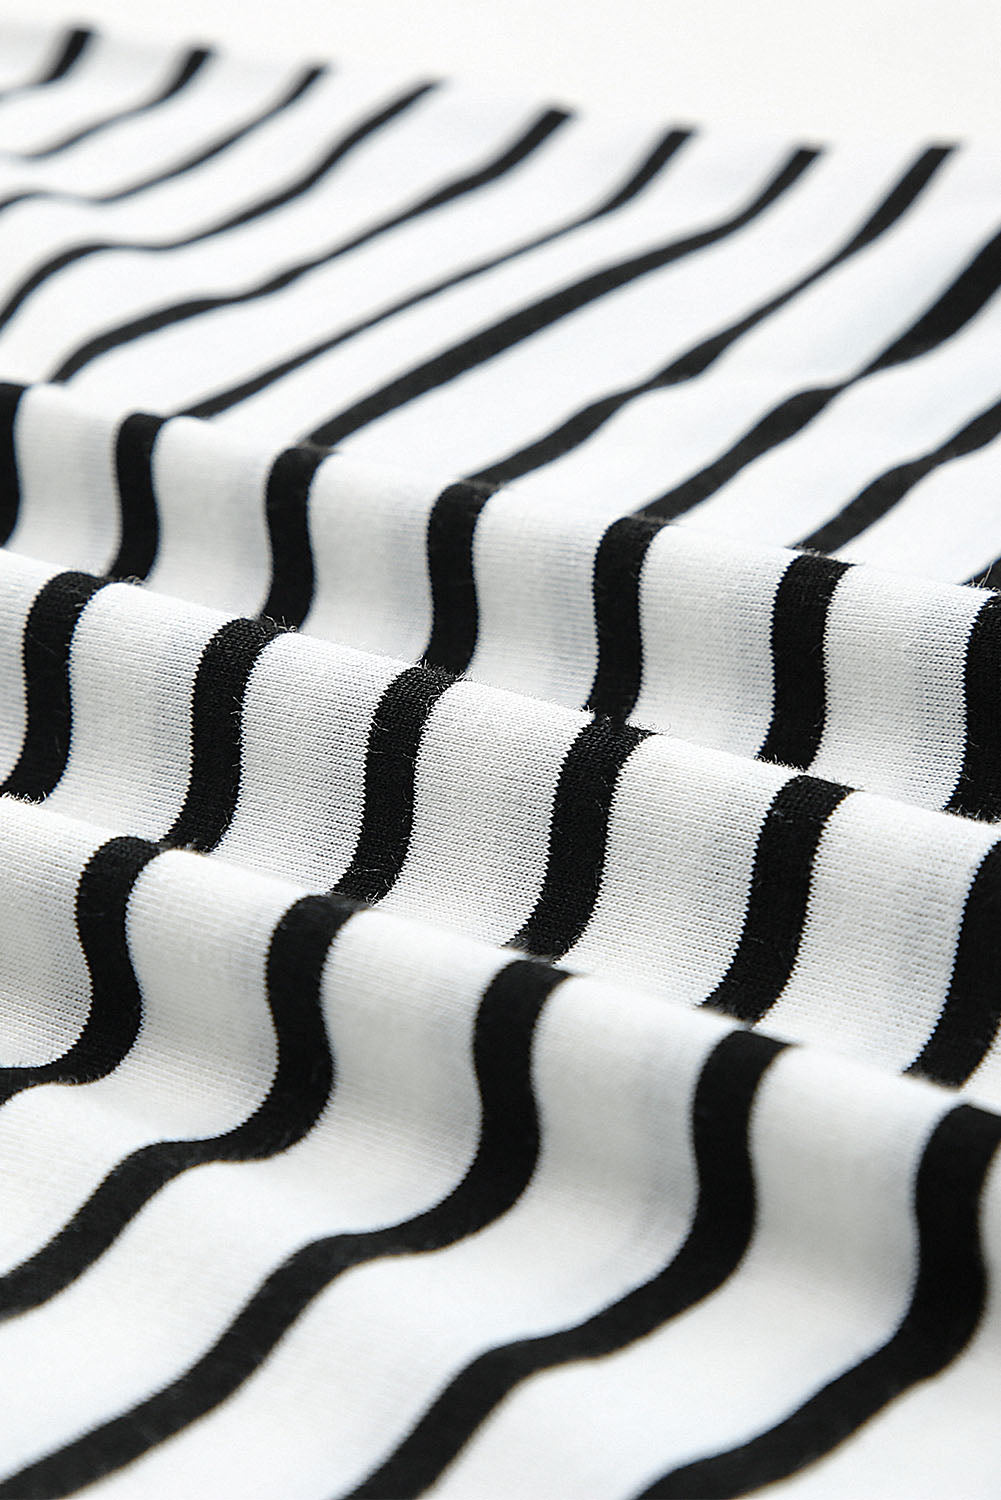 Striped Print Side Split Short Sleeve V Neck Maxi Dress